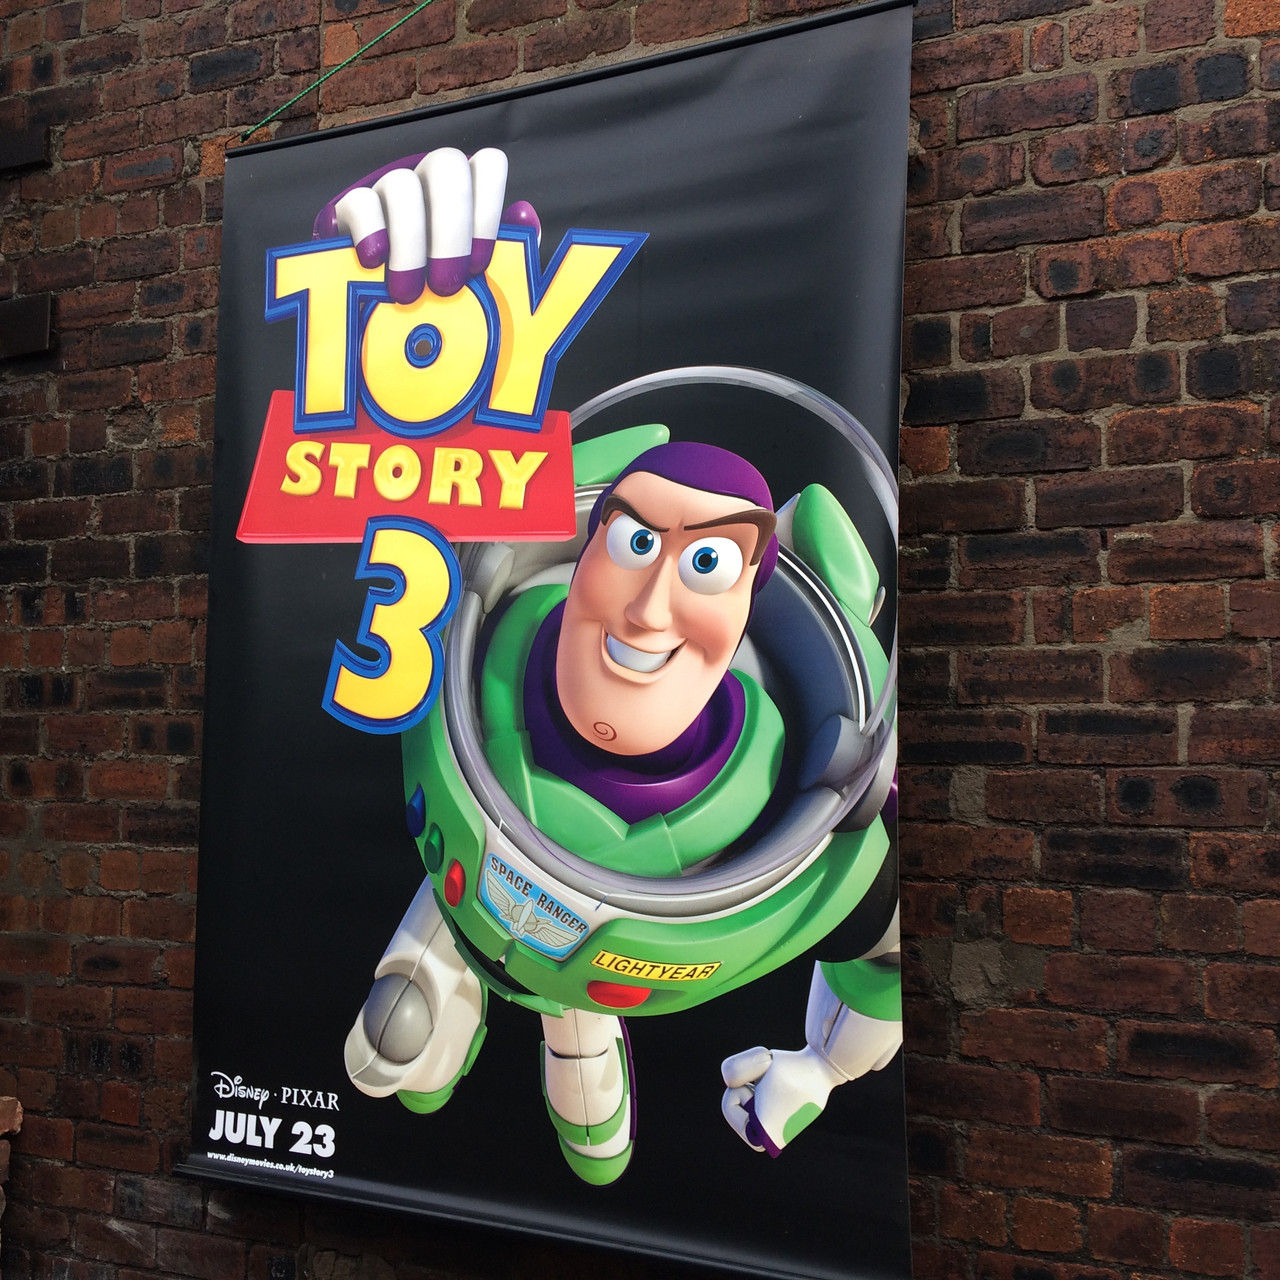 Toy Story 3 (Disney Pixar 2010) HUGE Cinema Foyer poster featuring Buzz ...